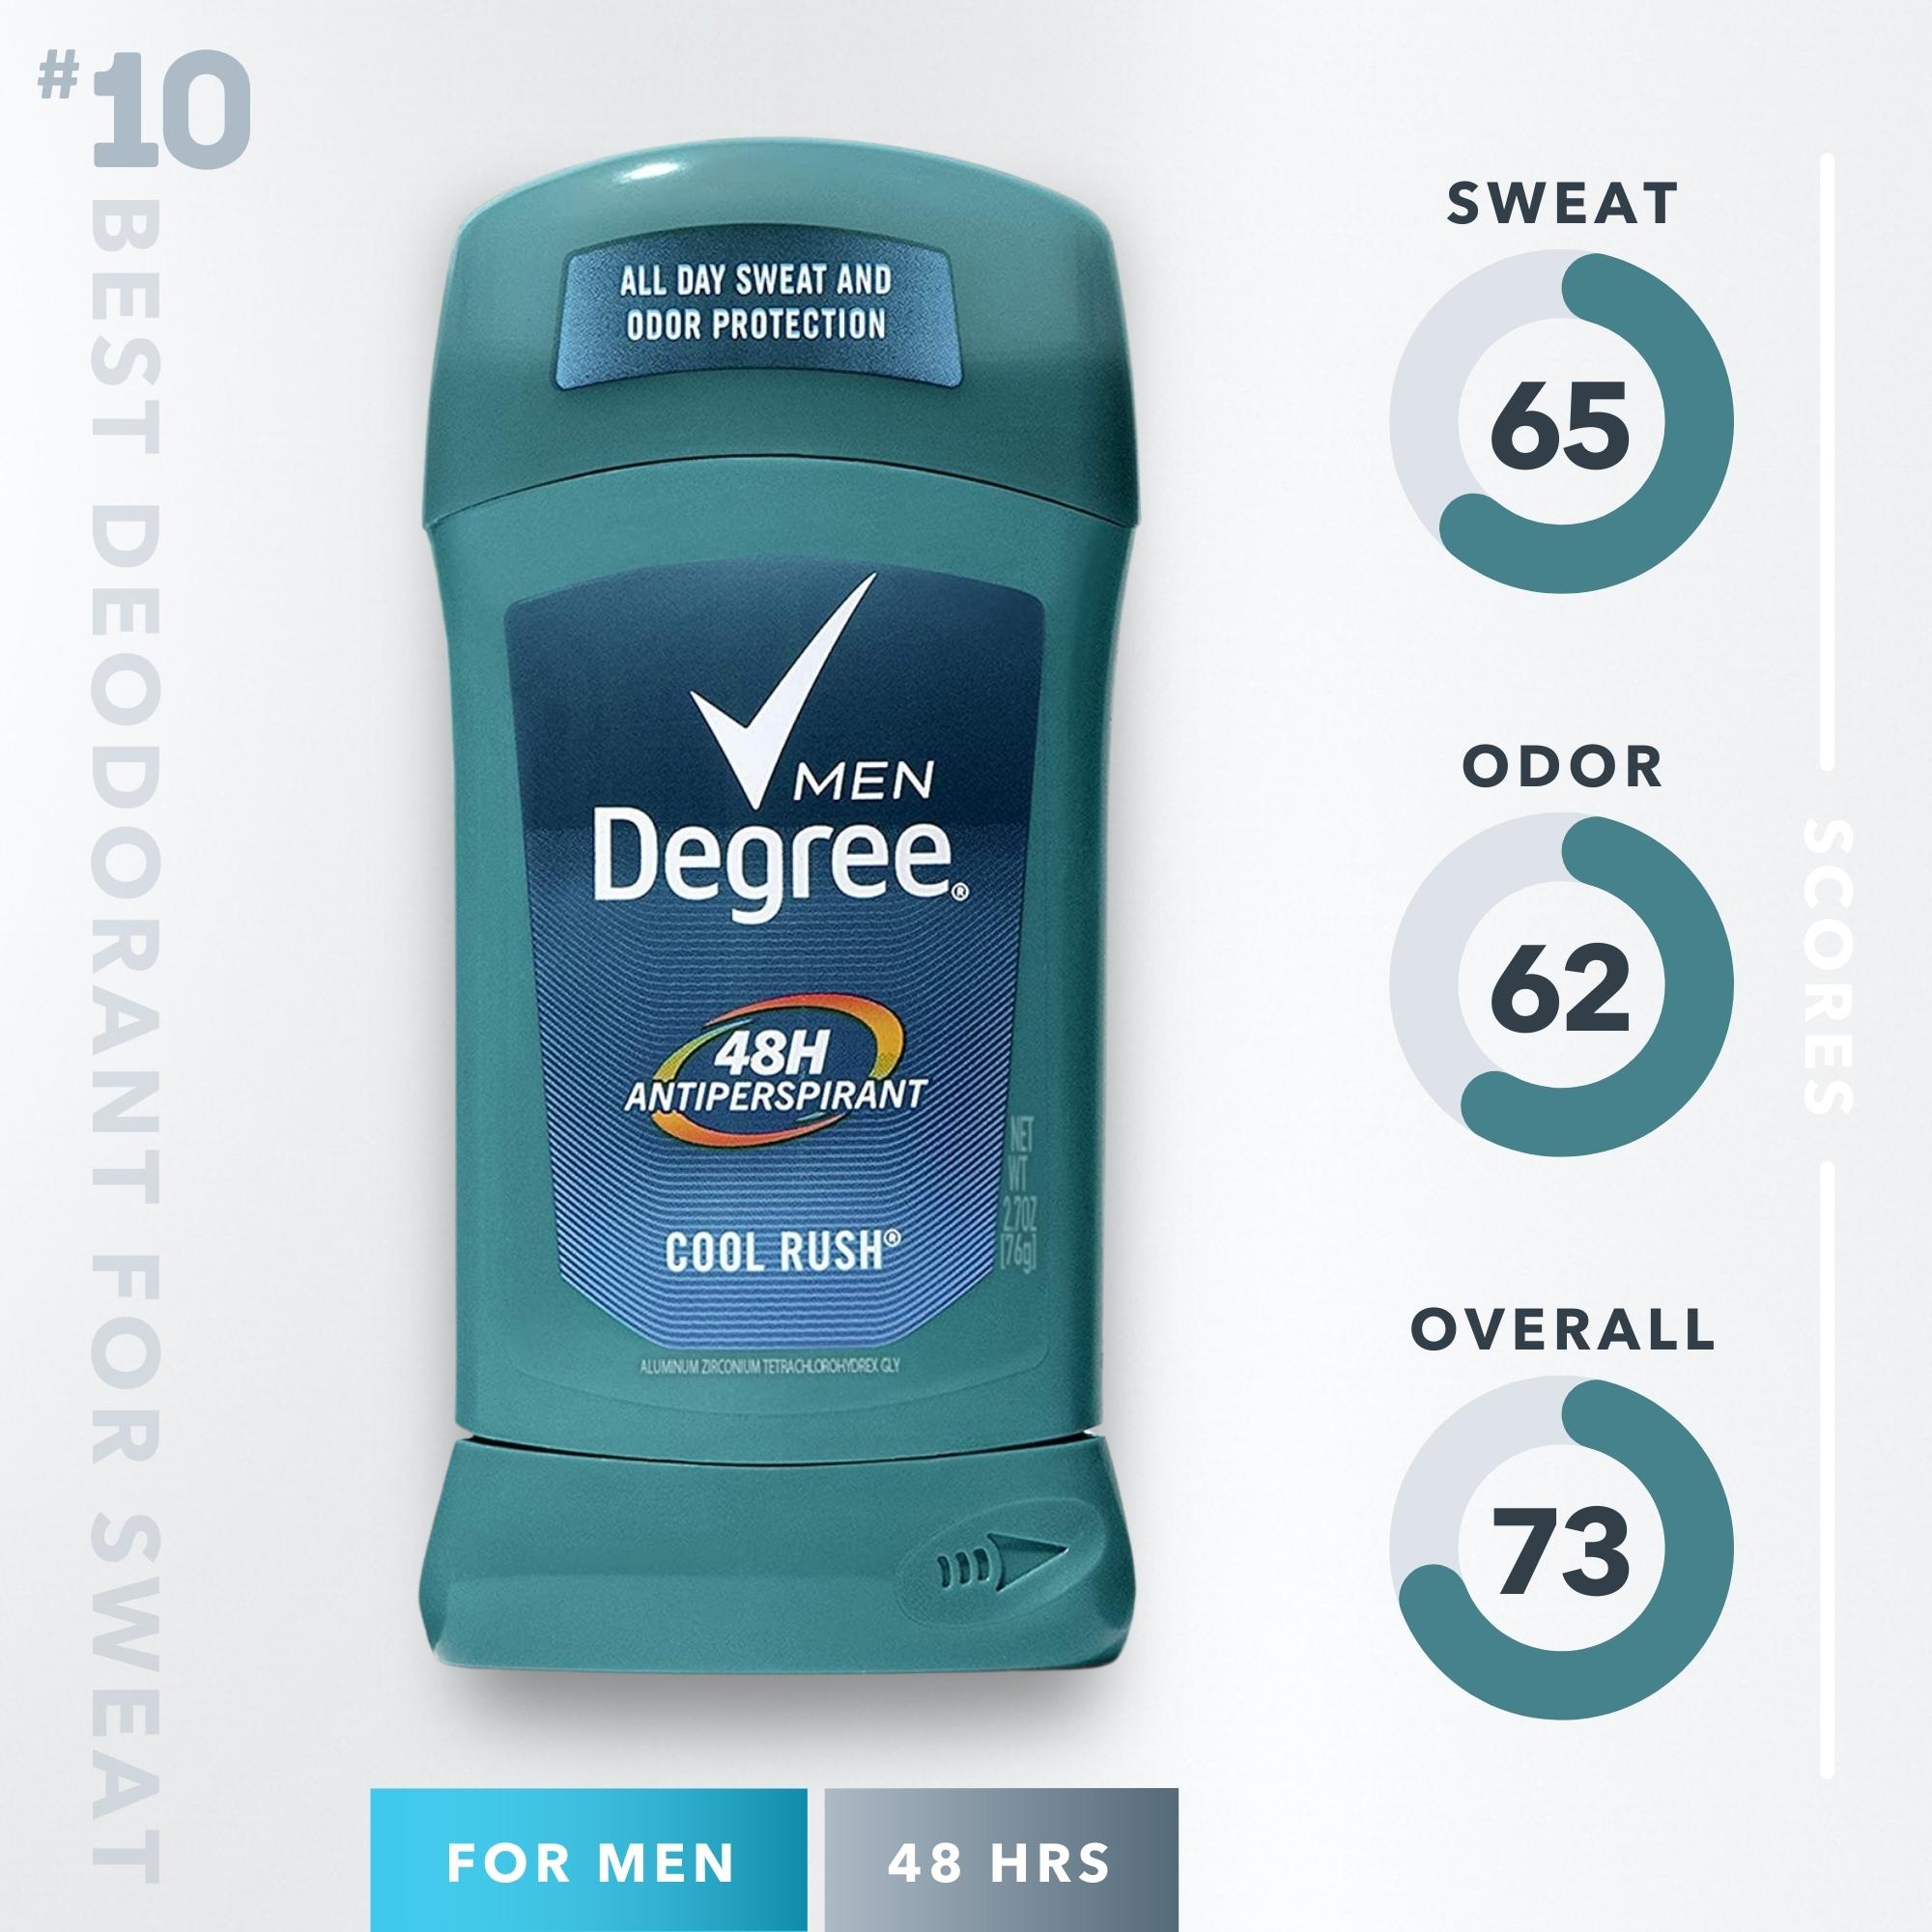 the best deodorant for sweaty